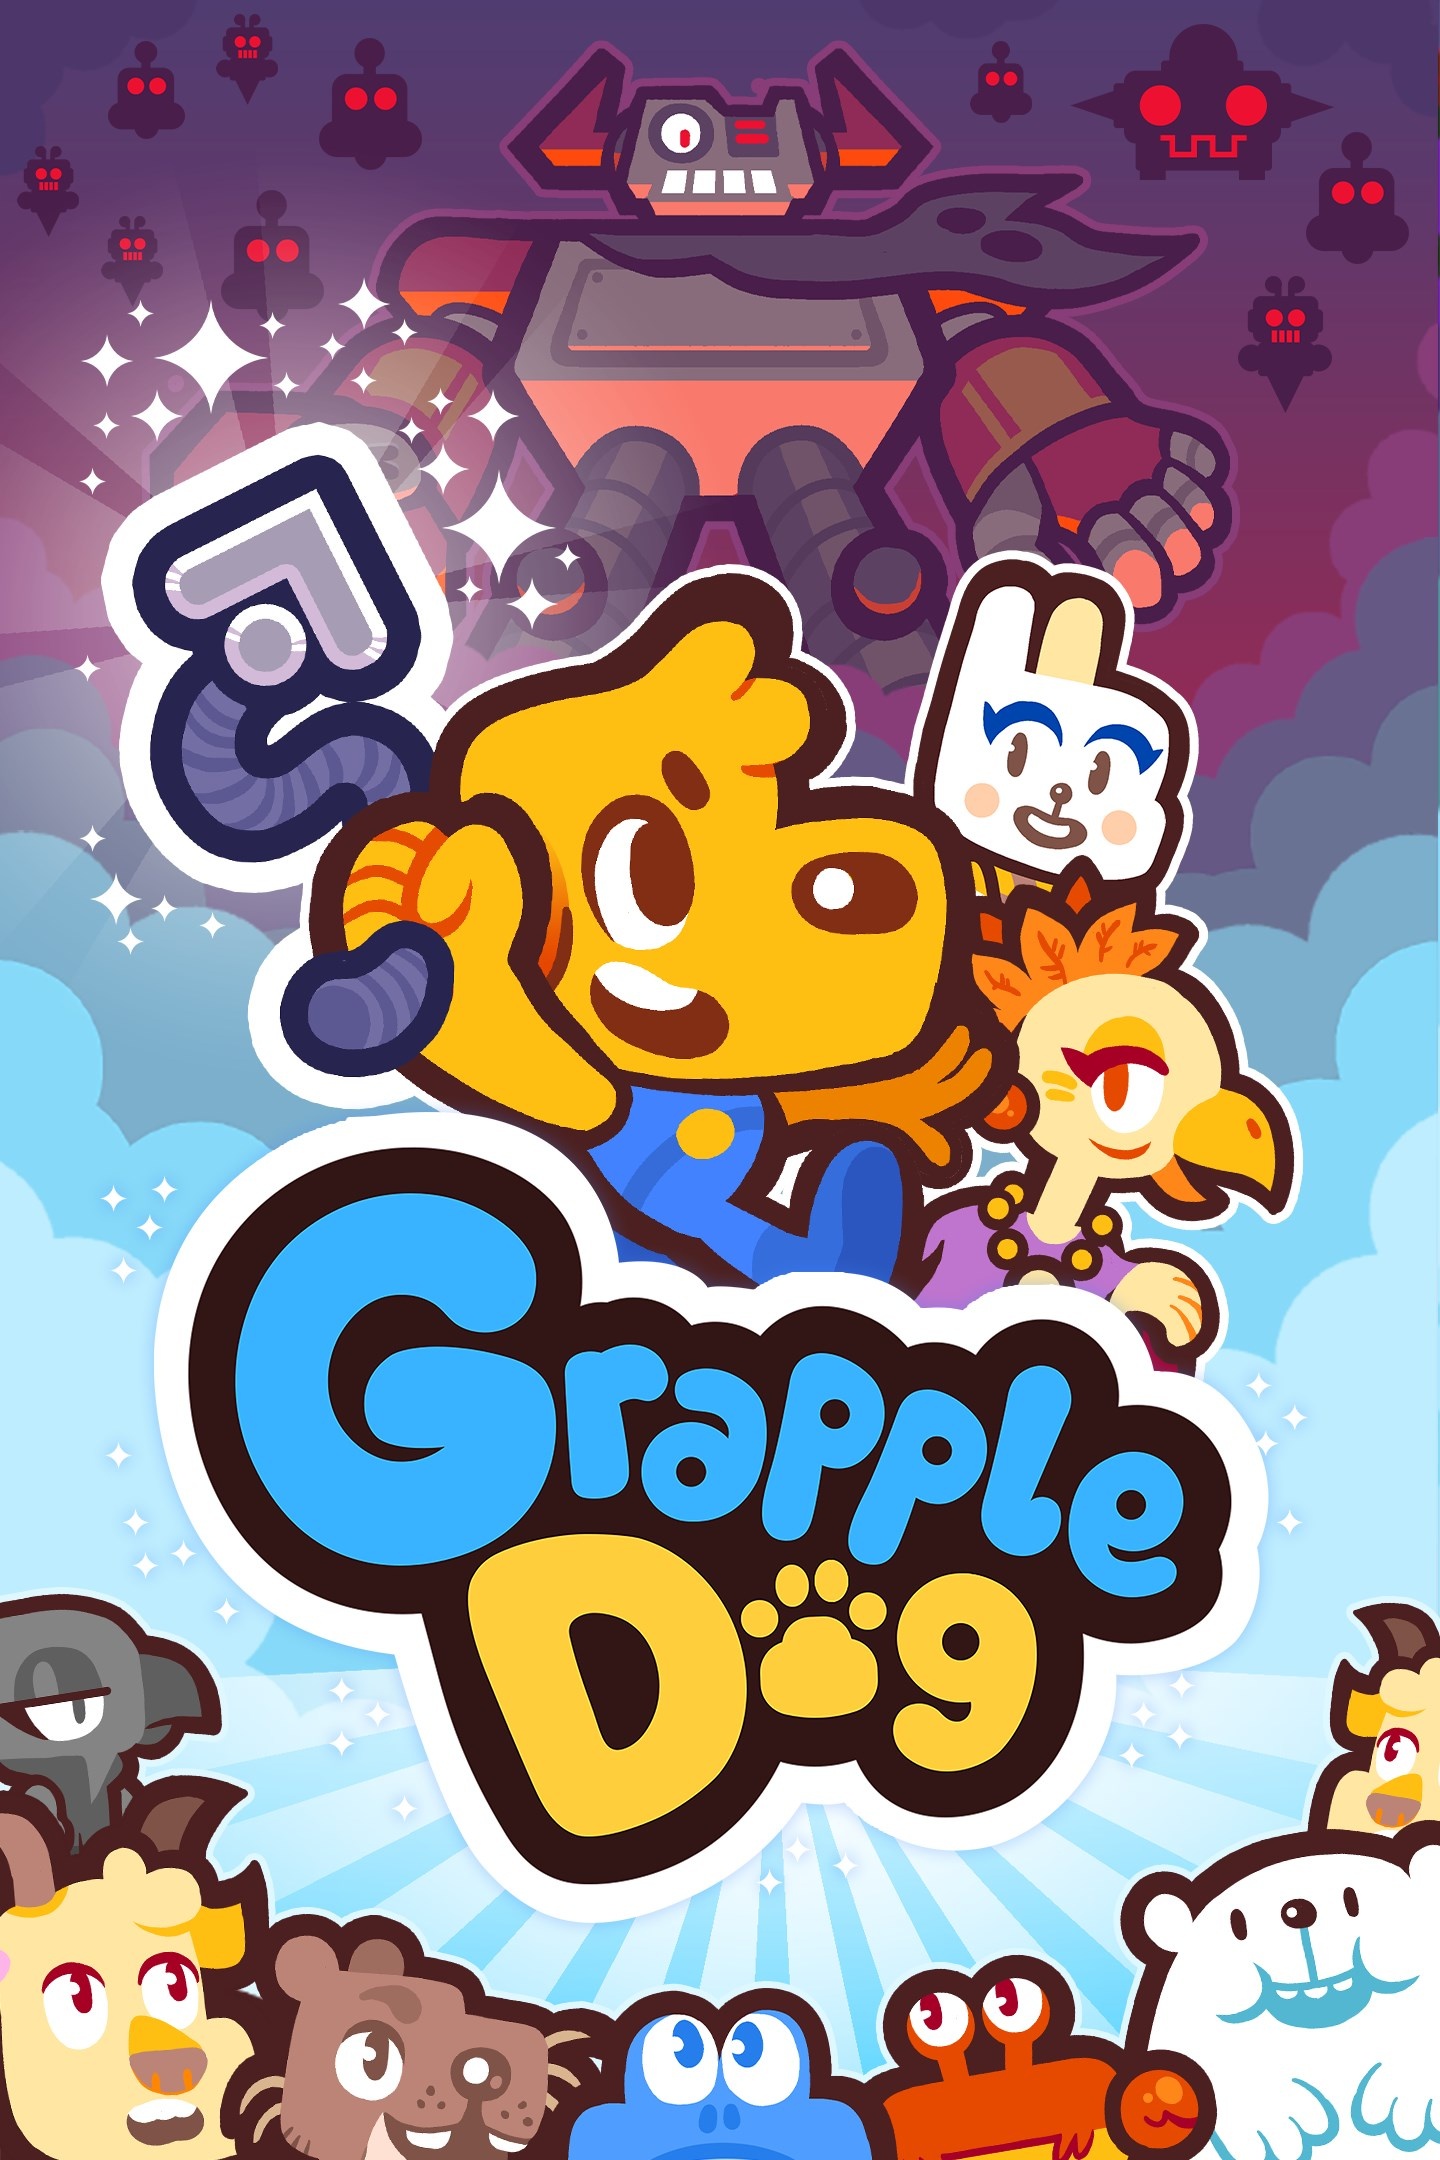 Grapple Dog - November 18 Optimized for Xbox Series X|S